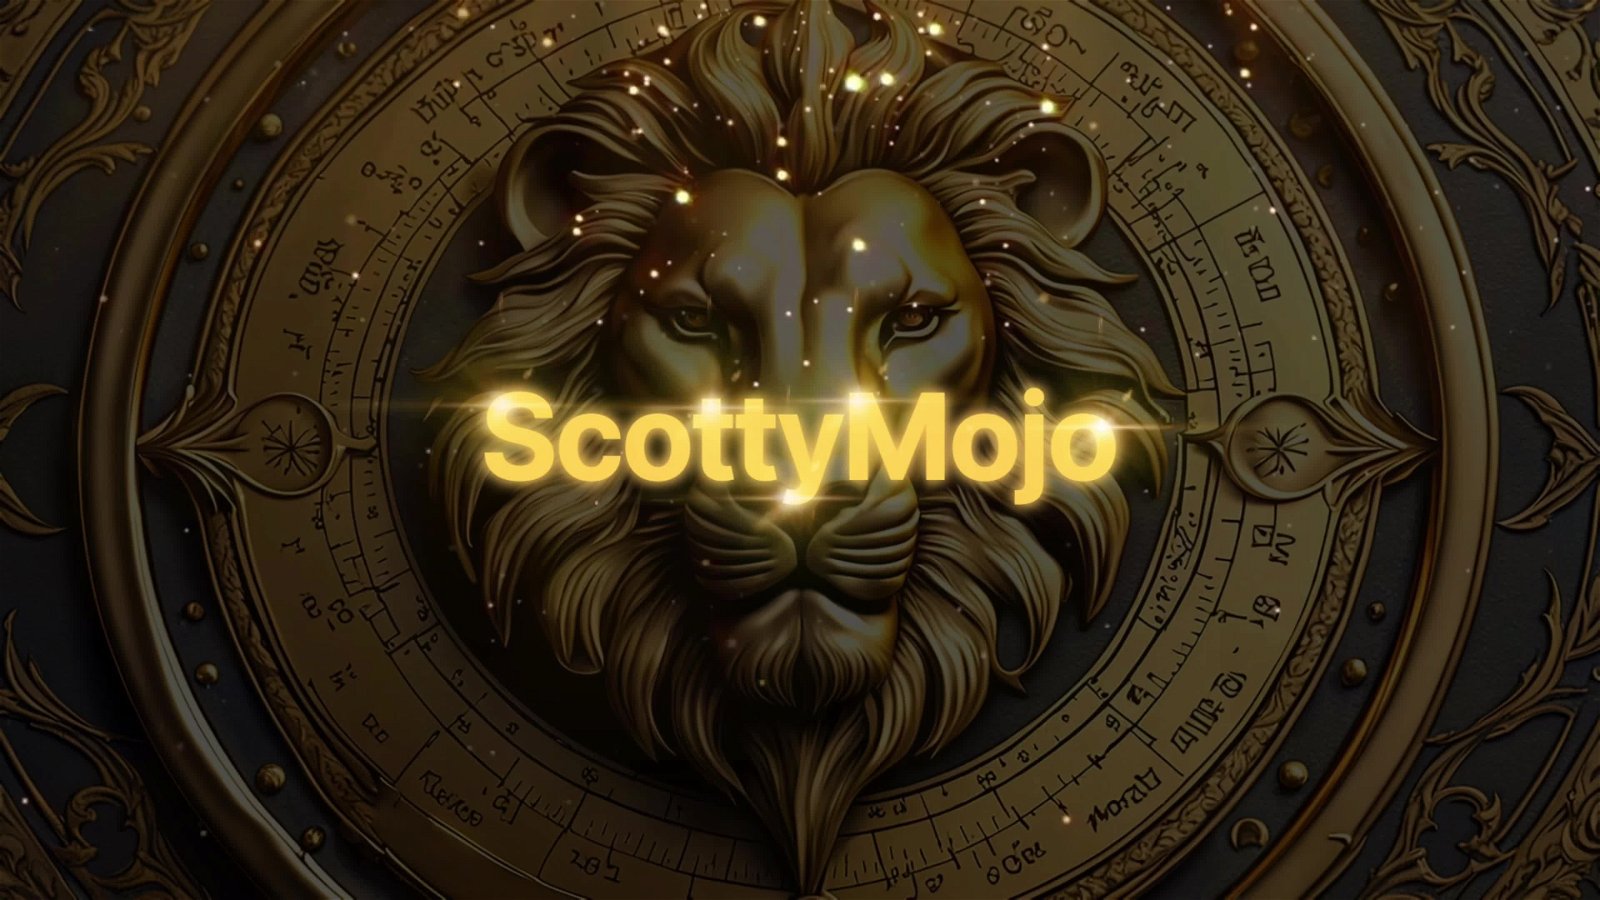 Video post by Scotty Mojo